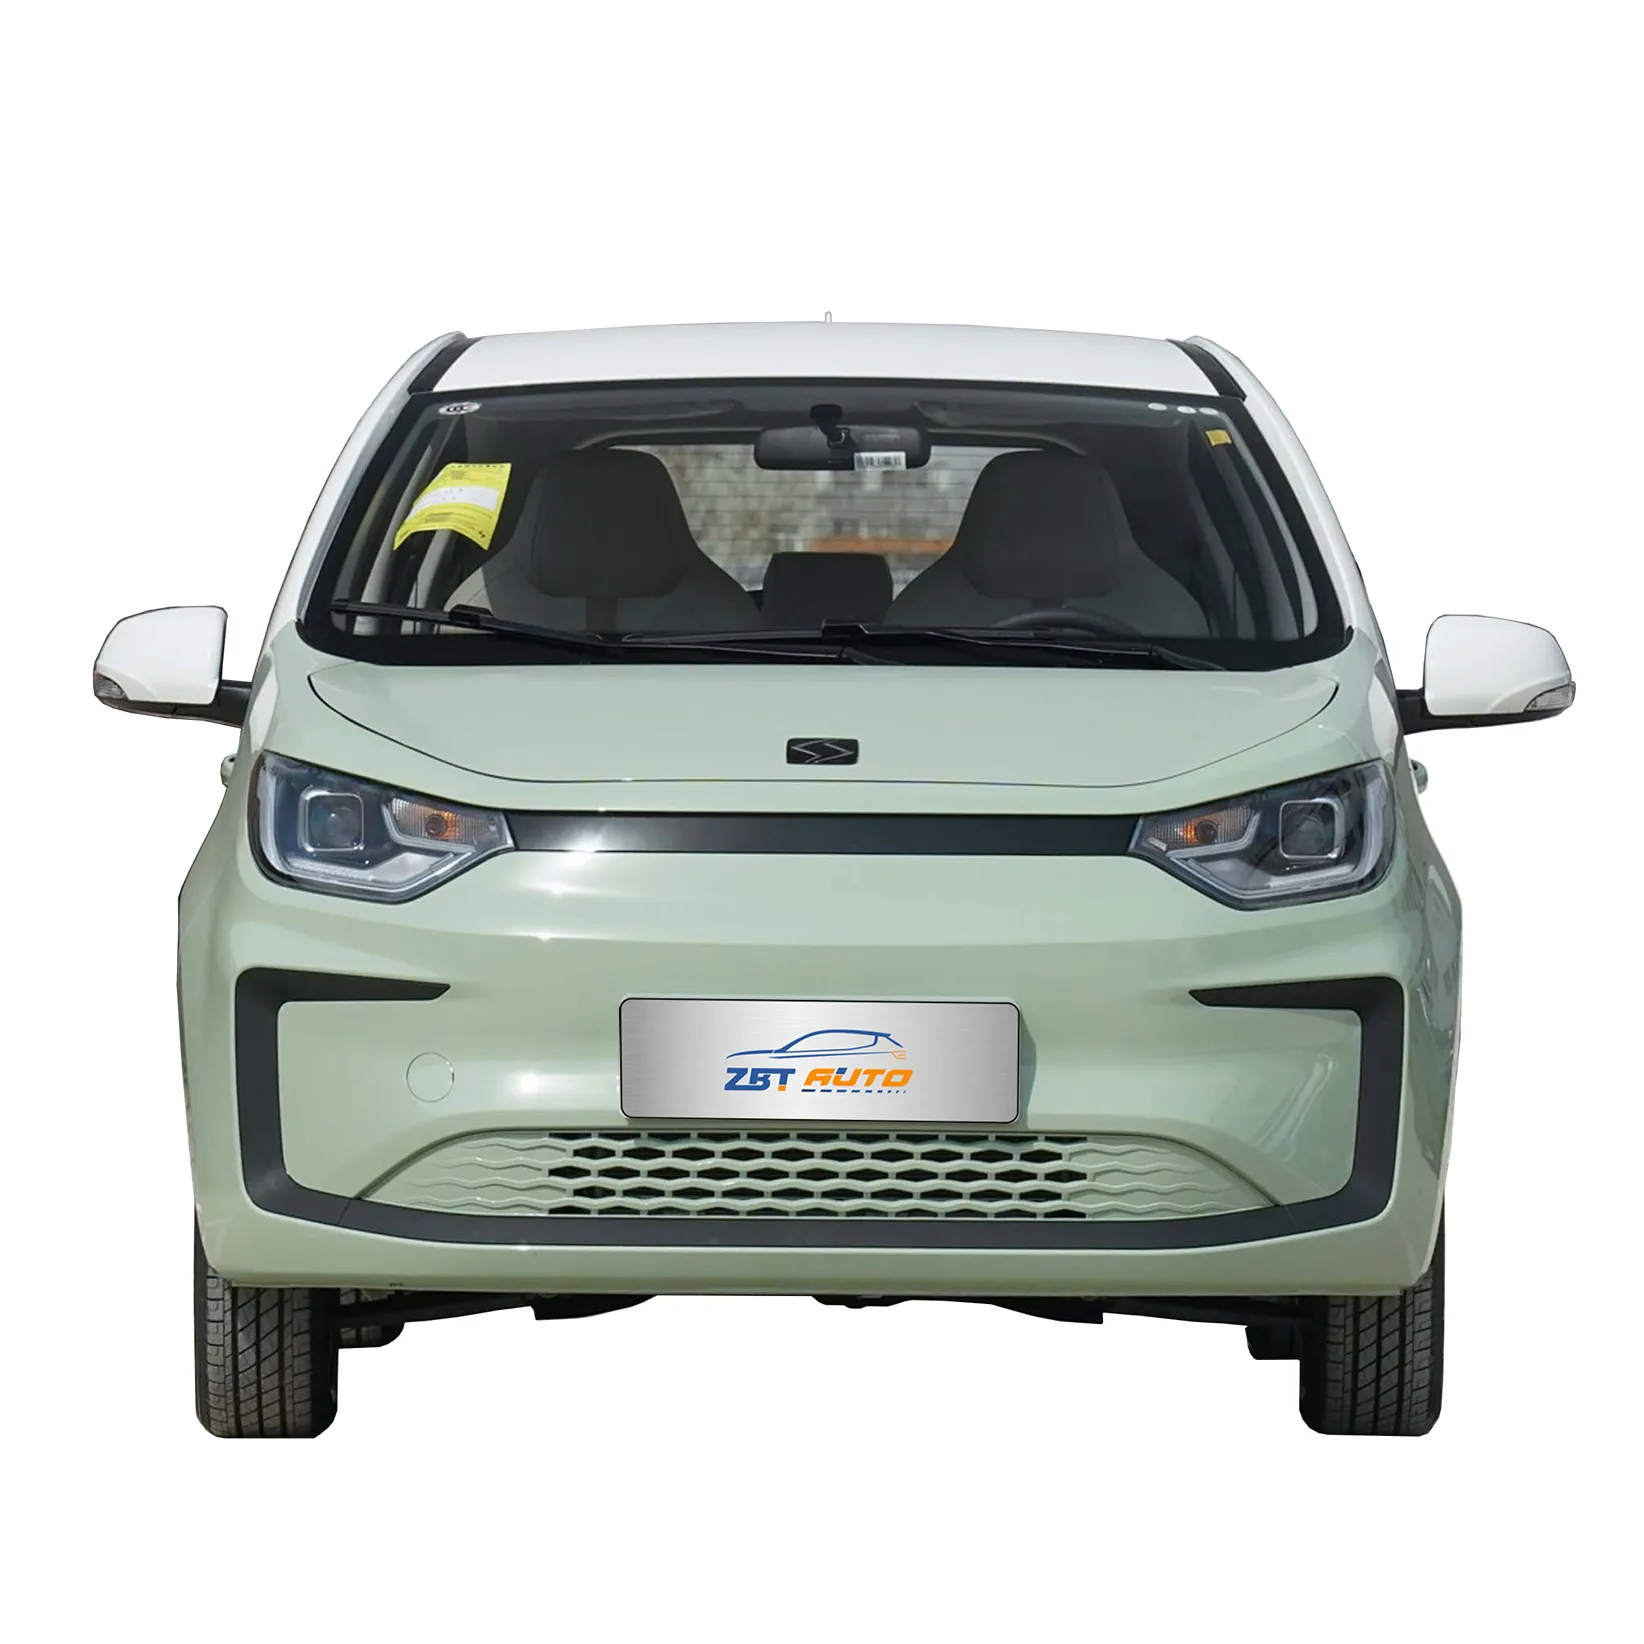 Çin'den SOL E10X çiçek peri Mini elektrikli araba yeni araba Mini Ev araba yeni enerji araç